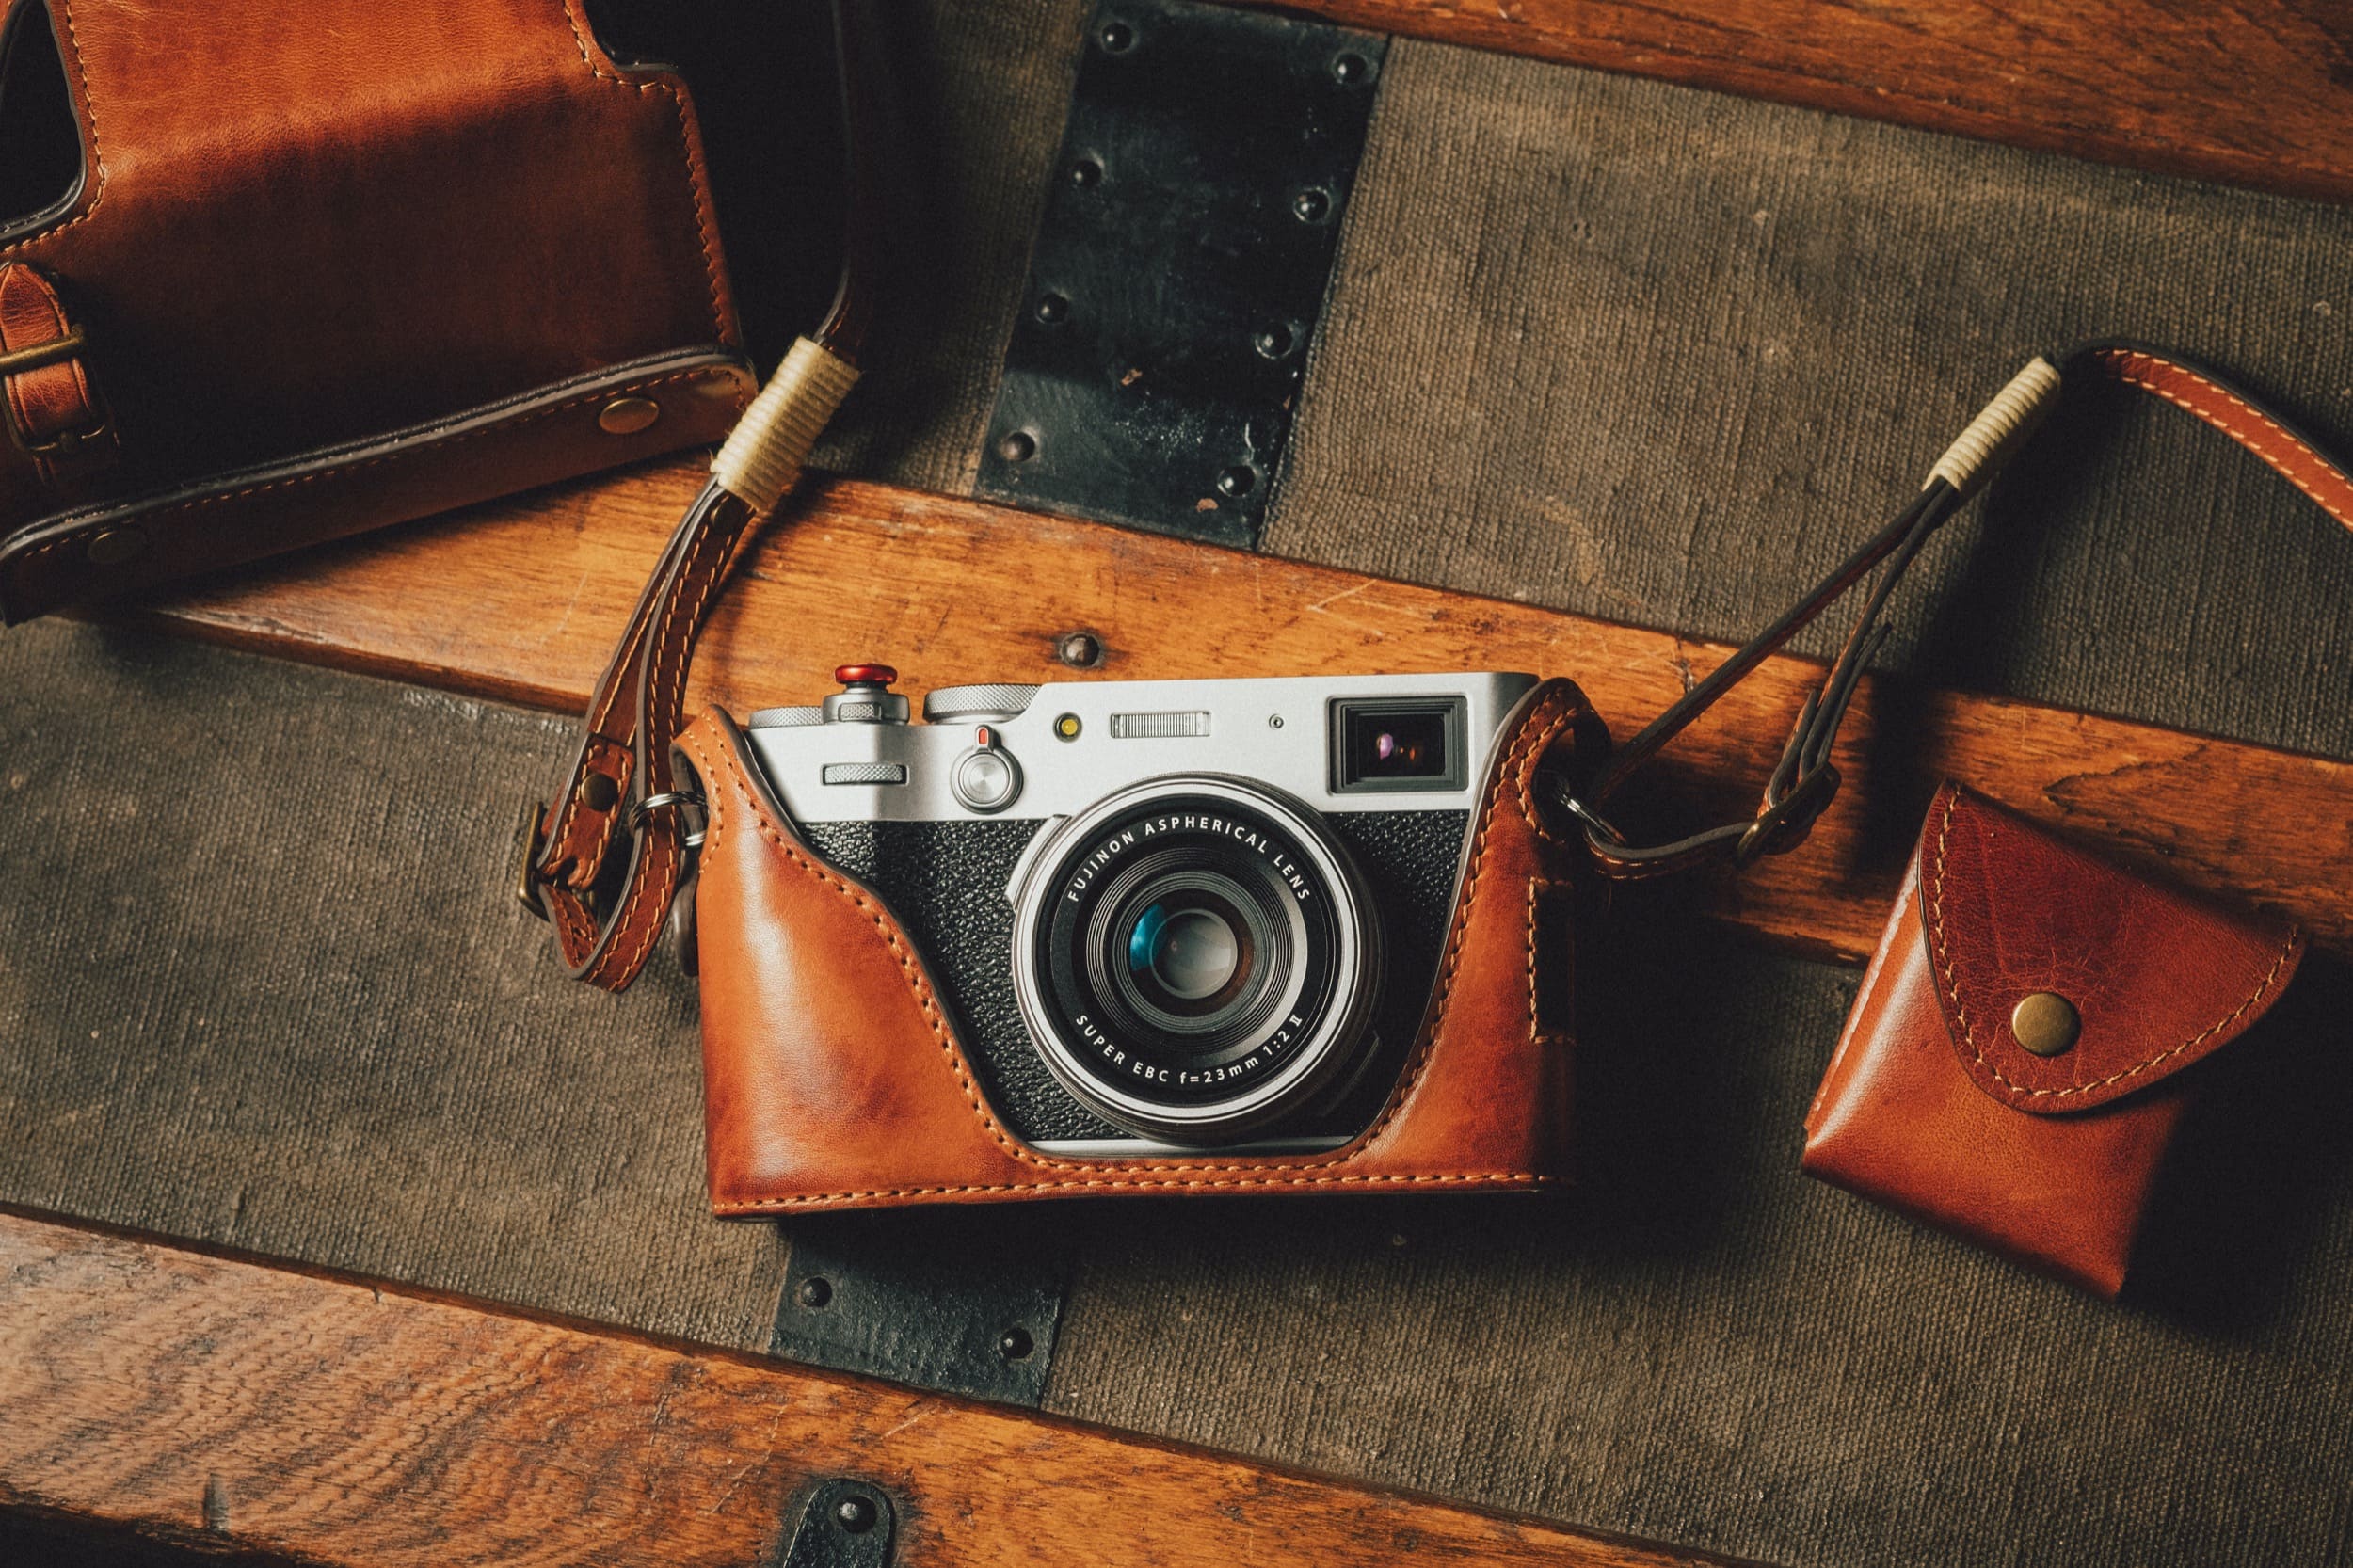 Shutter Totes Designer Camera Bag Roundup and Review + A Special